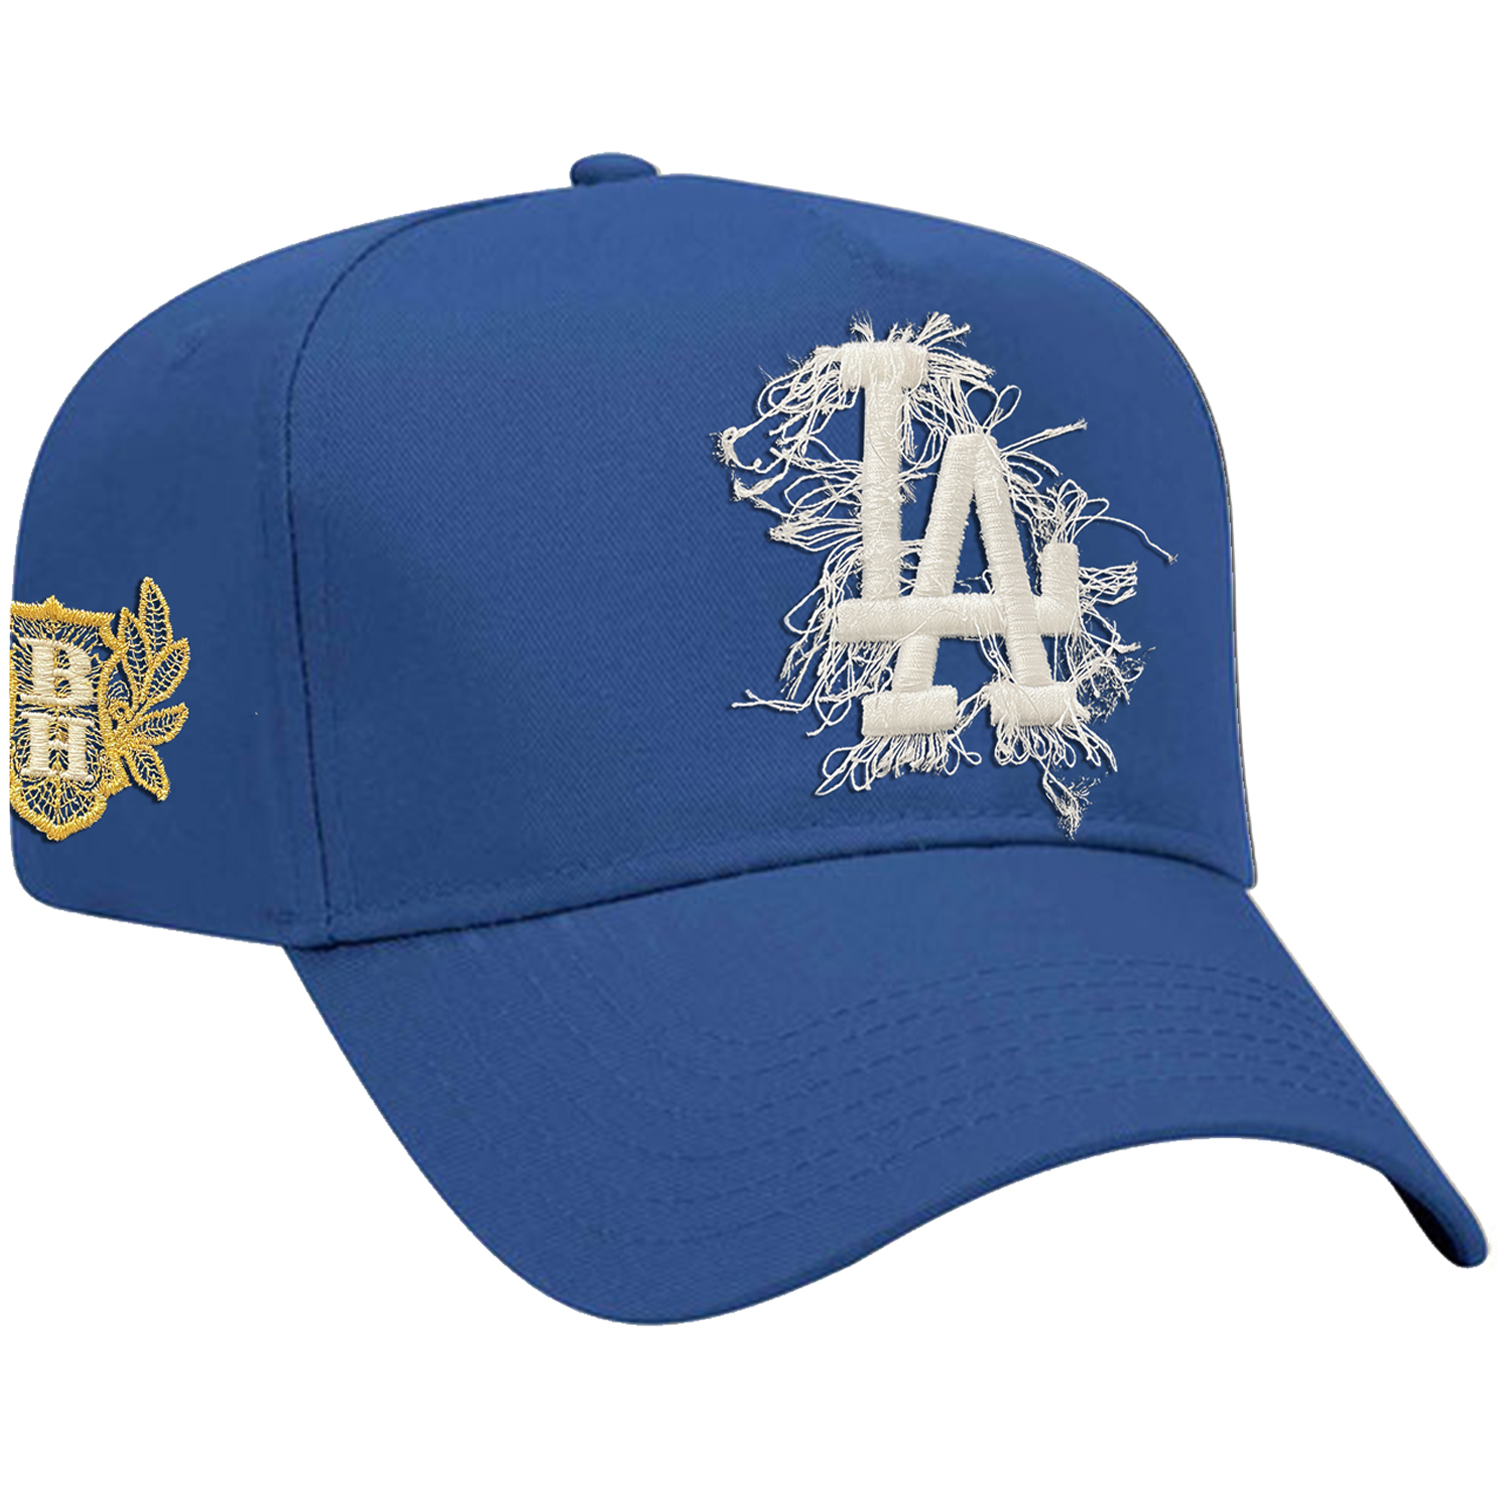 Royal Vintage Flatbill Hat - Los Angeles (White La)